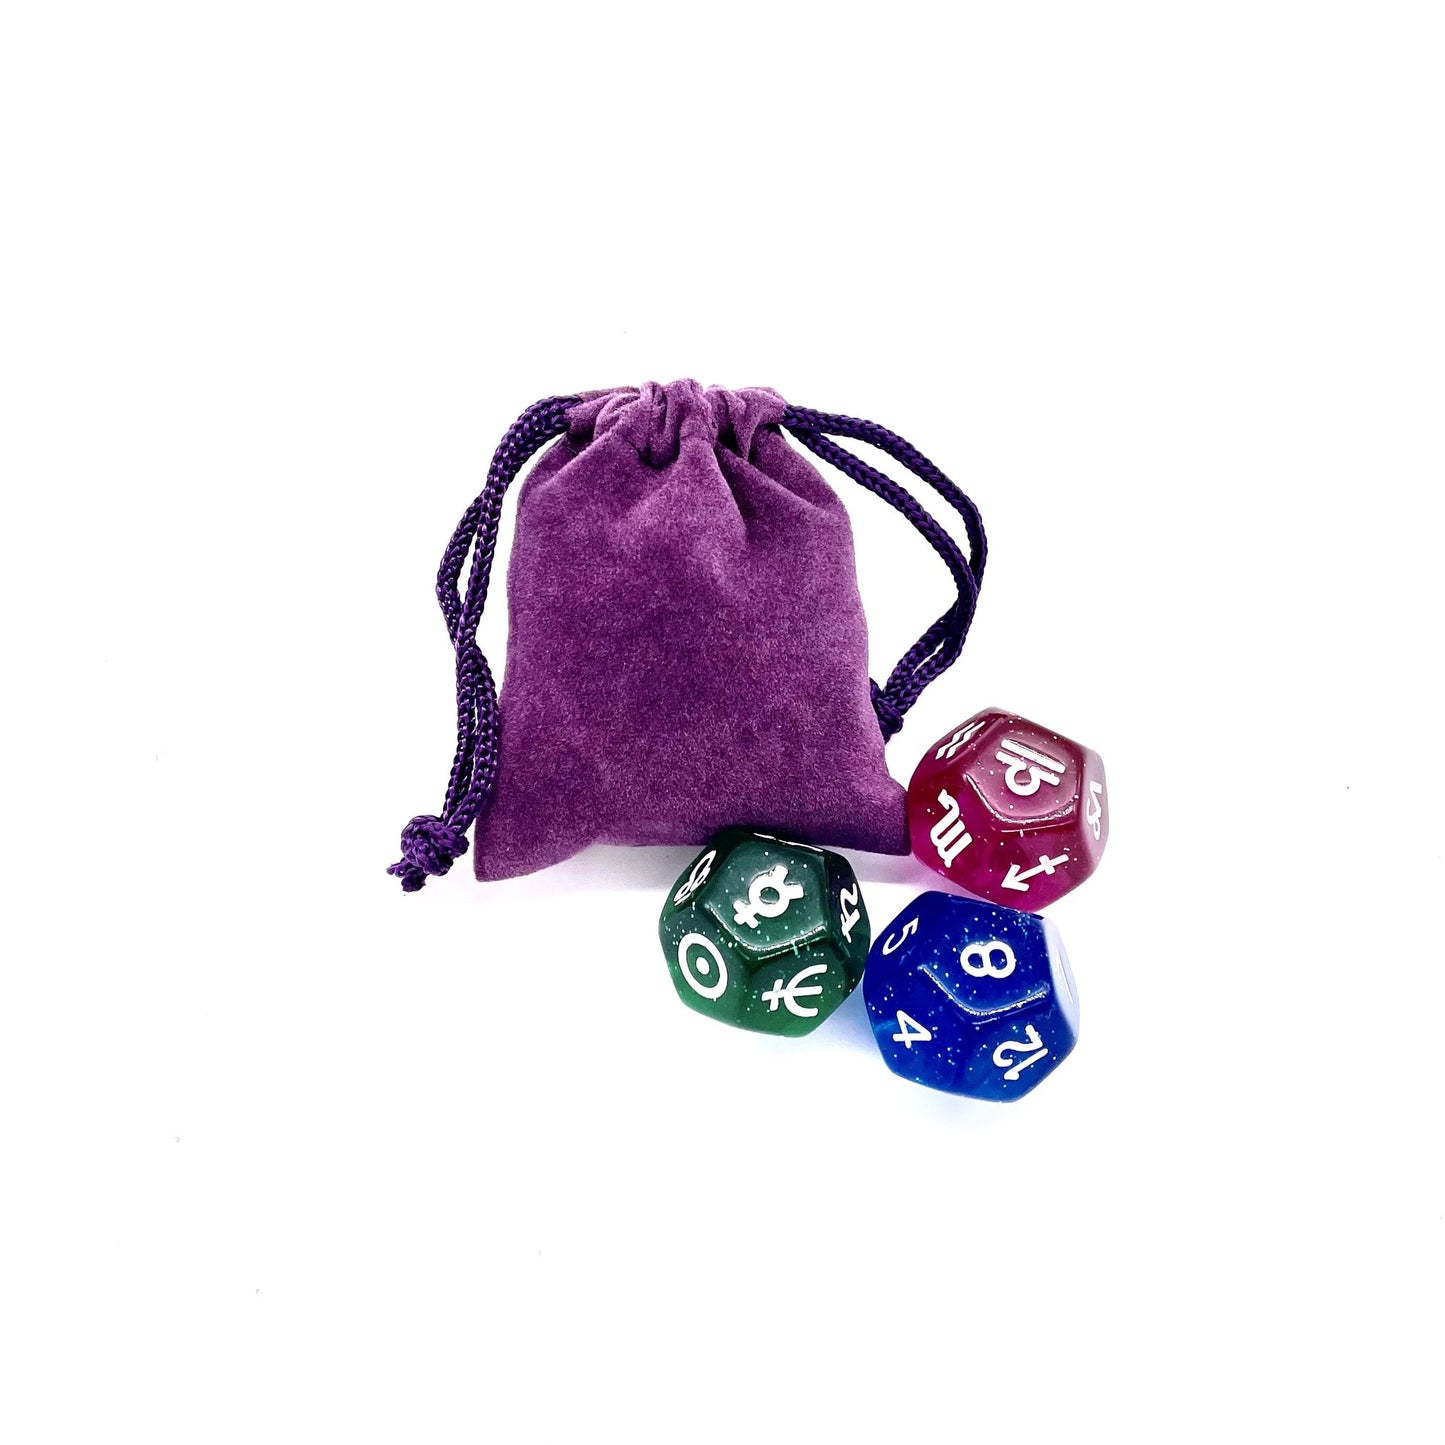 Three astro dice next to a purple velvet pouch.